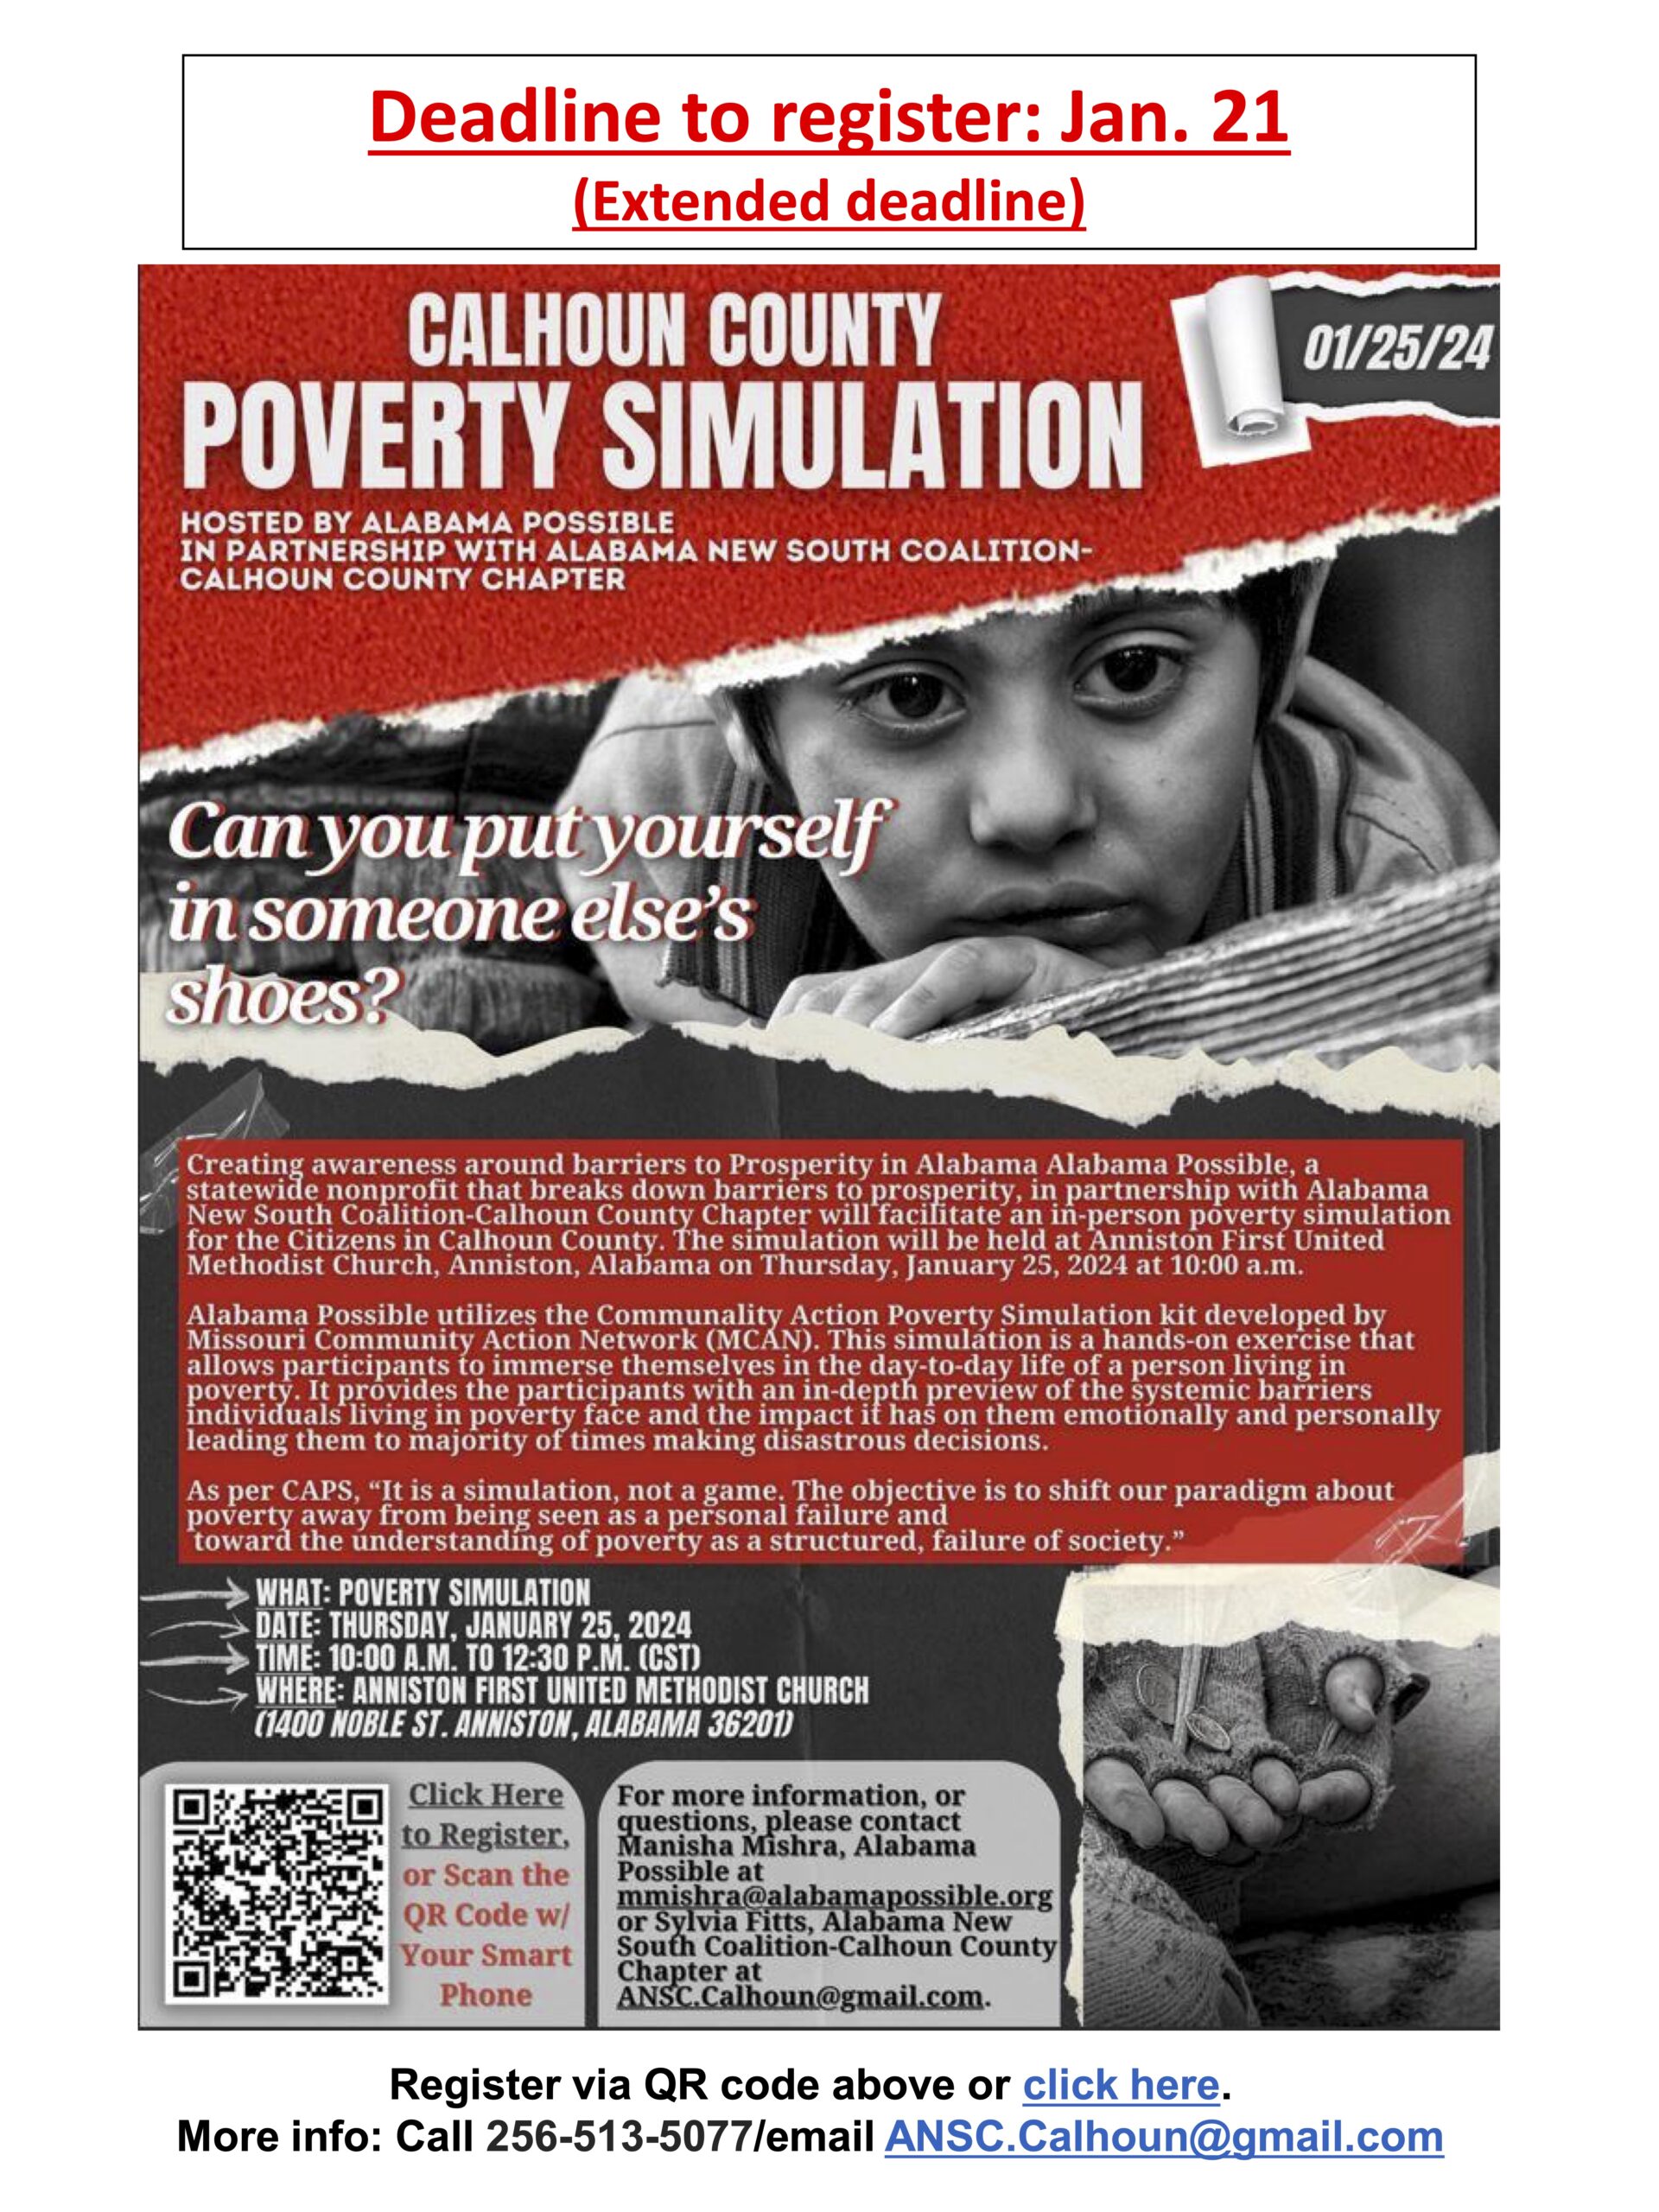 ANSC poverty sim w extended deadline